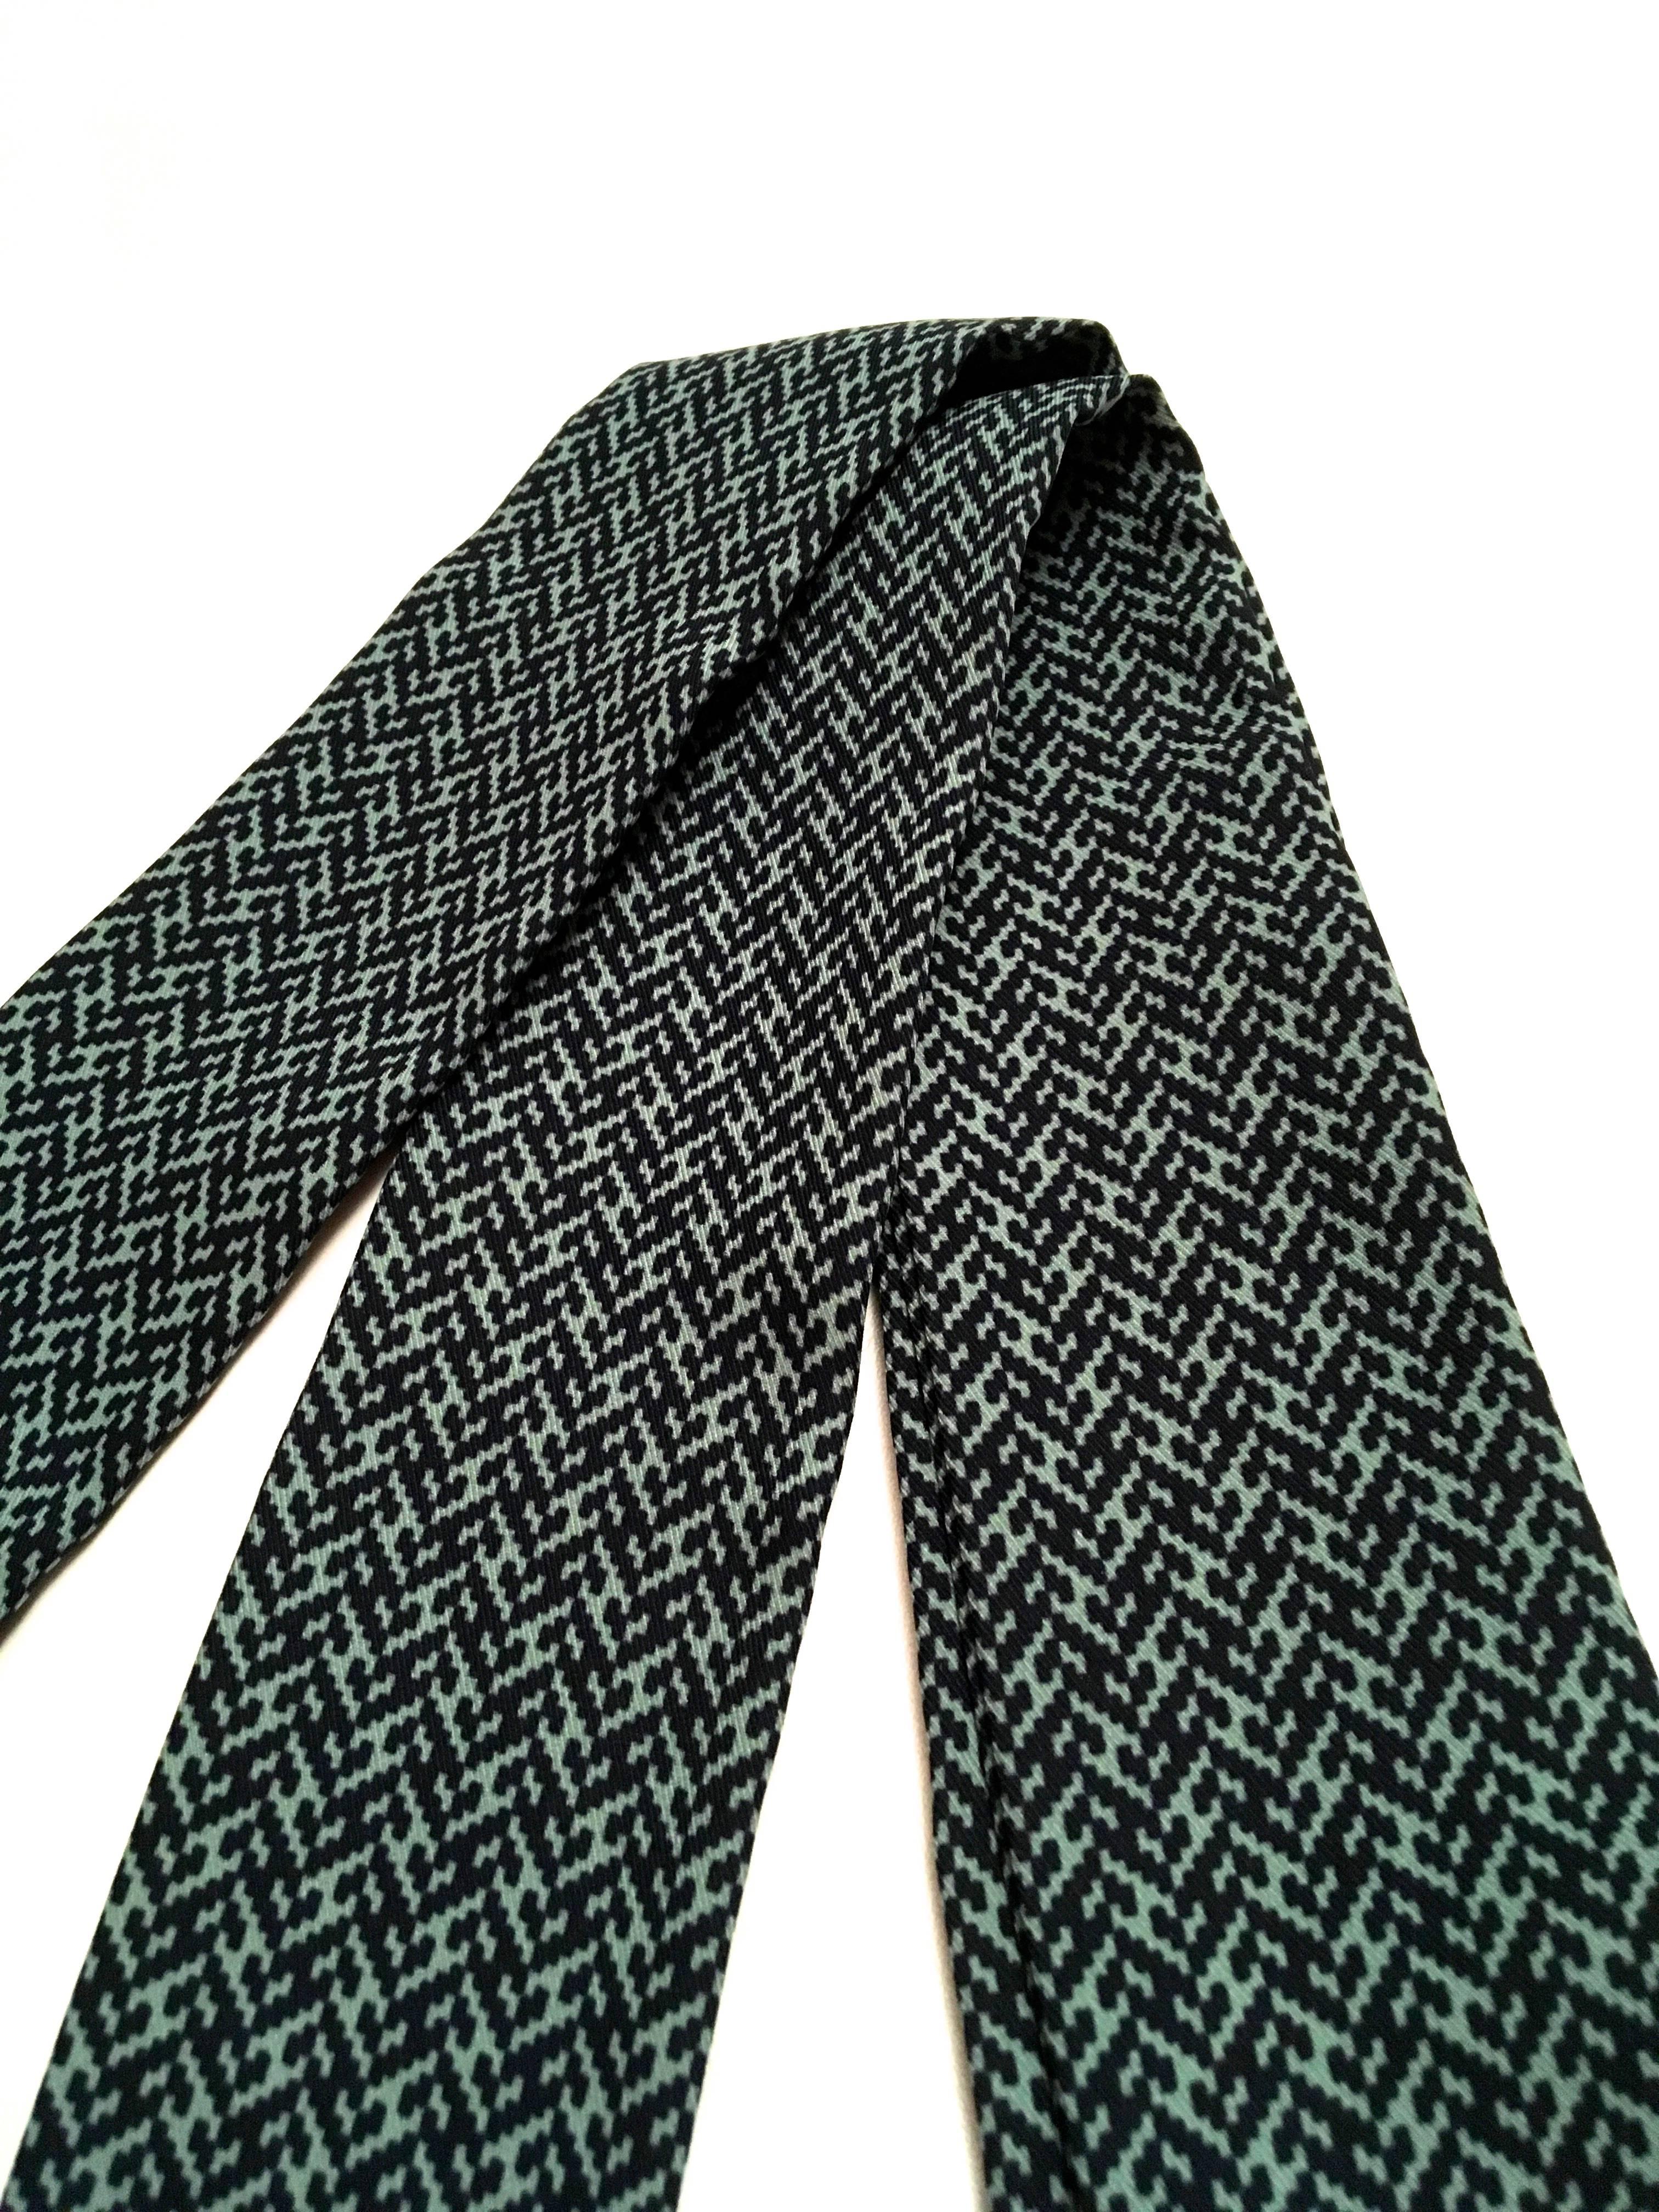 Rare Hermes Scarf / Tie / Belt - 100% Silk - New  For Sale 1